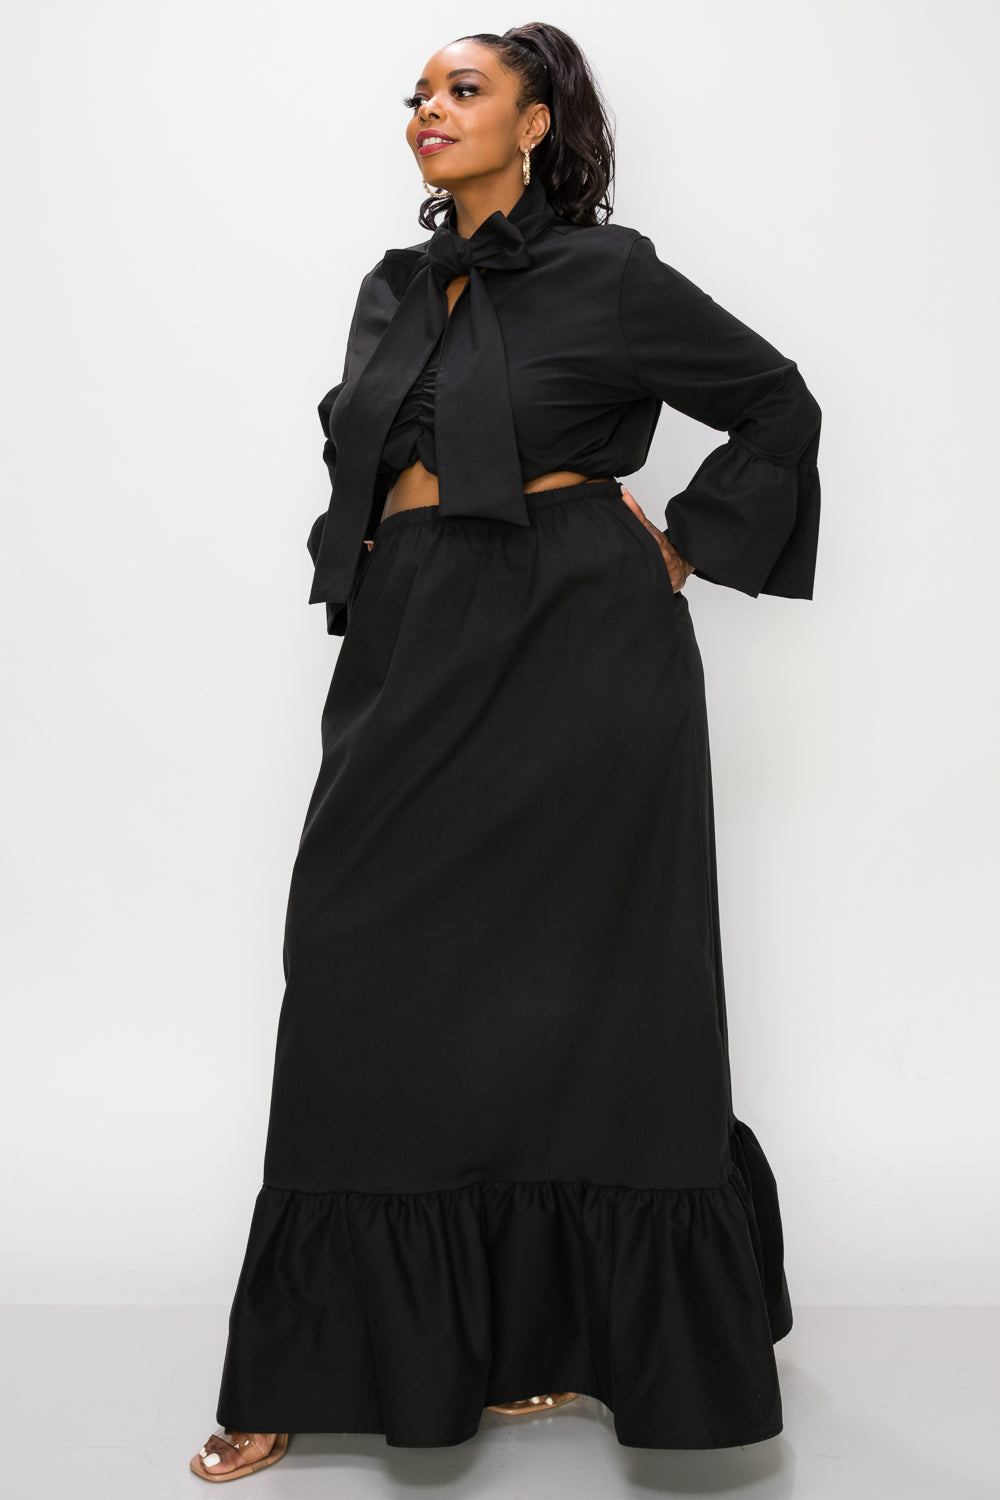 Poplin Bell Sleeve Top and Maxi Skirt Set - L I V D